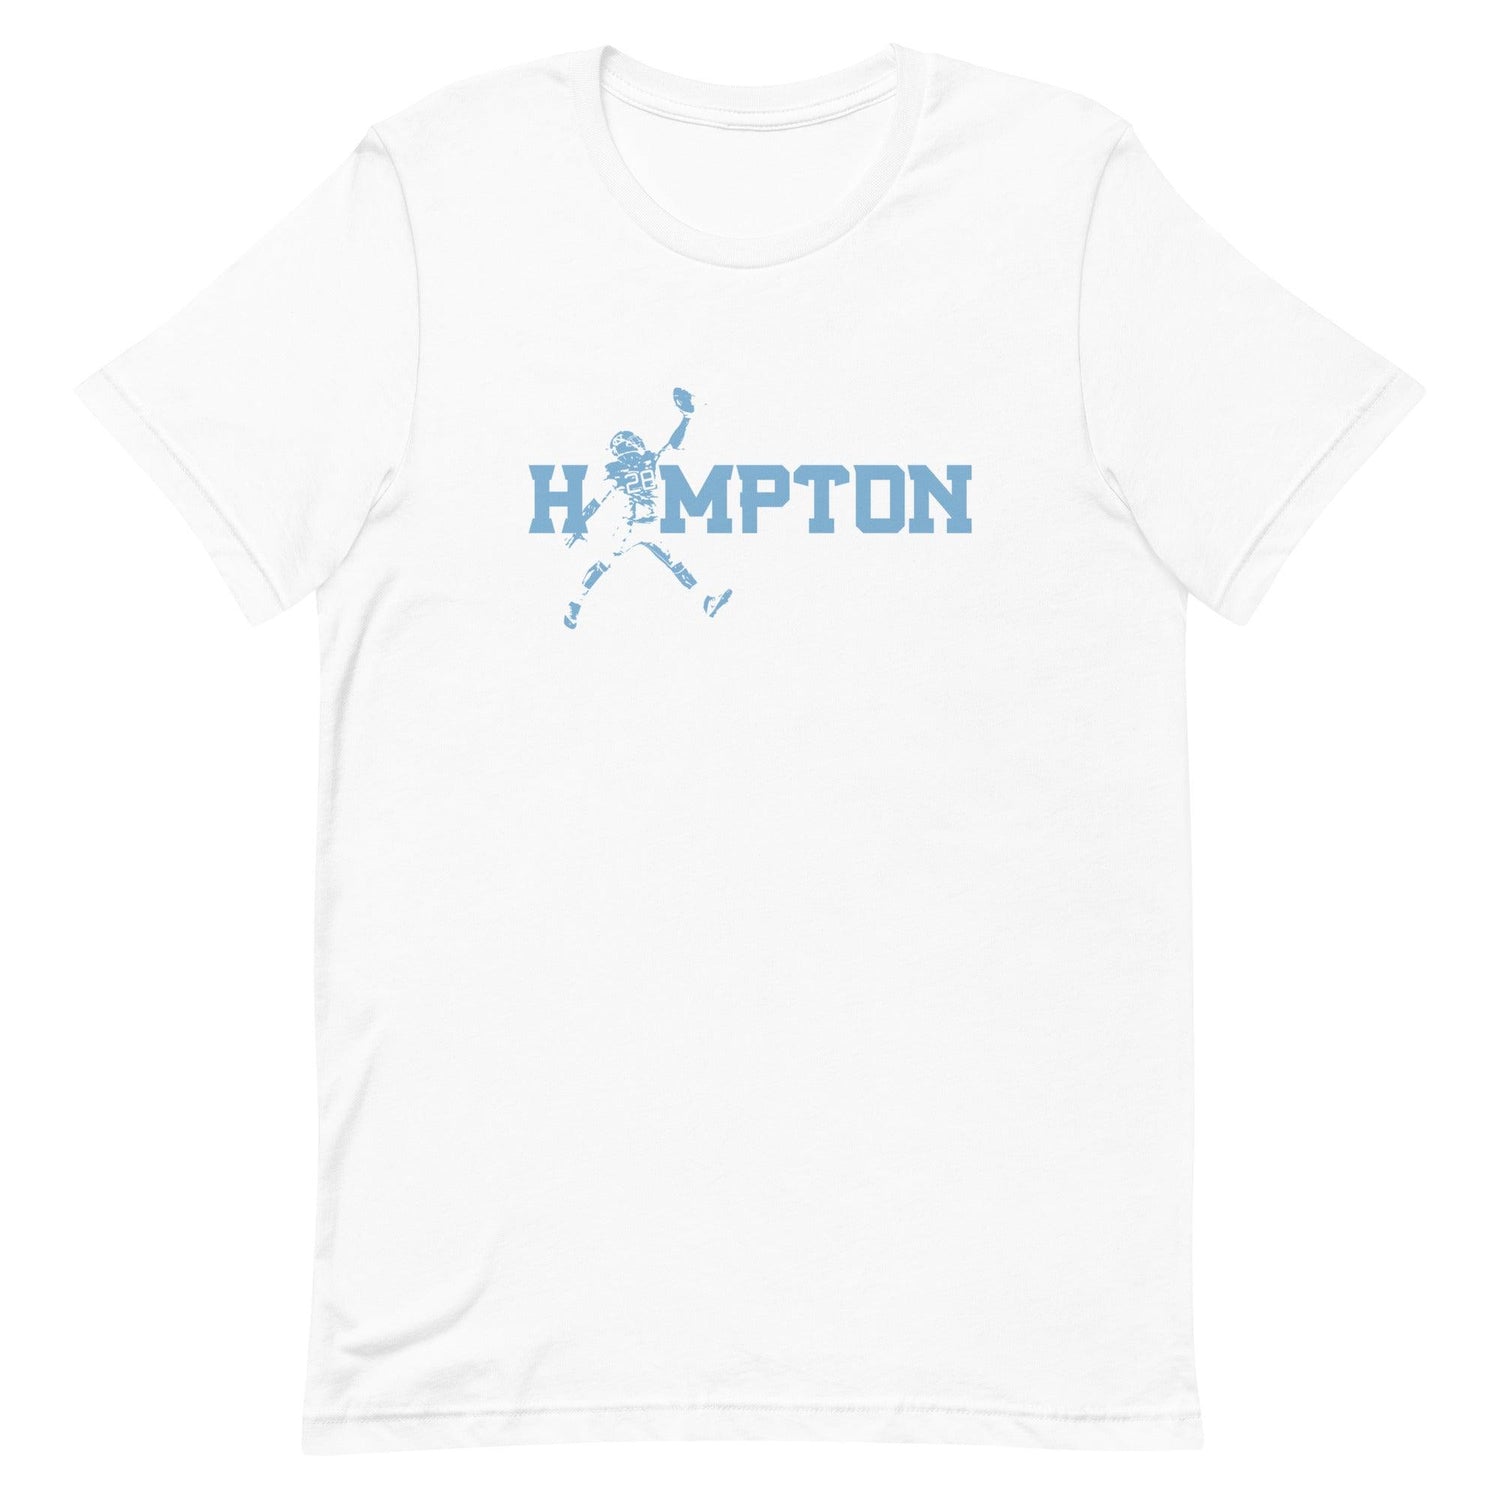 Omarion Hampton "Next Level" t-shirt - Fan Arch